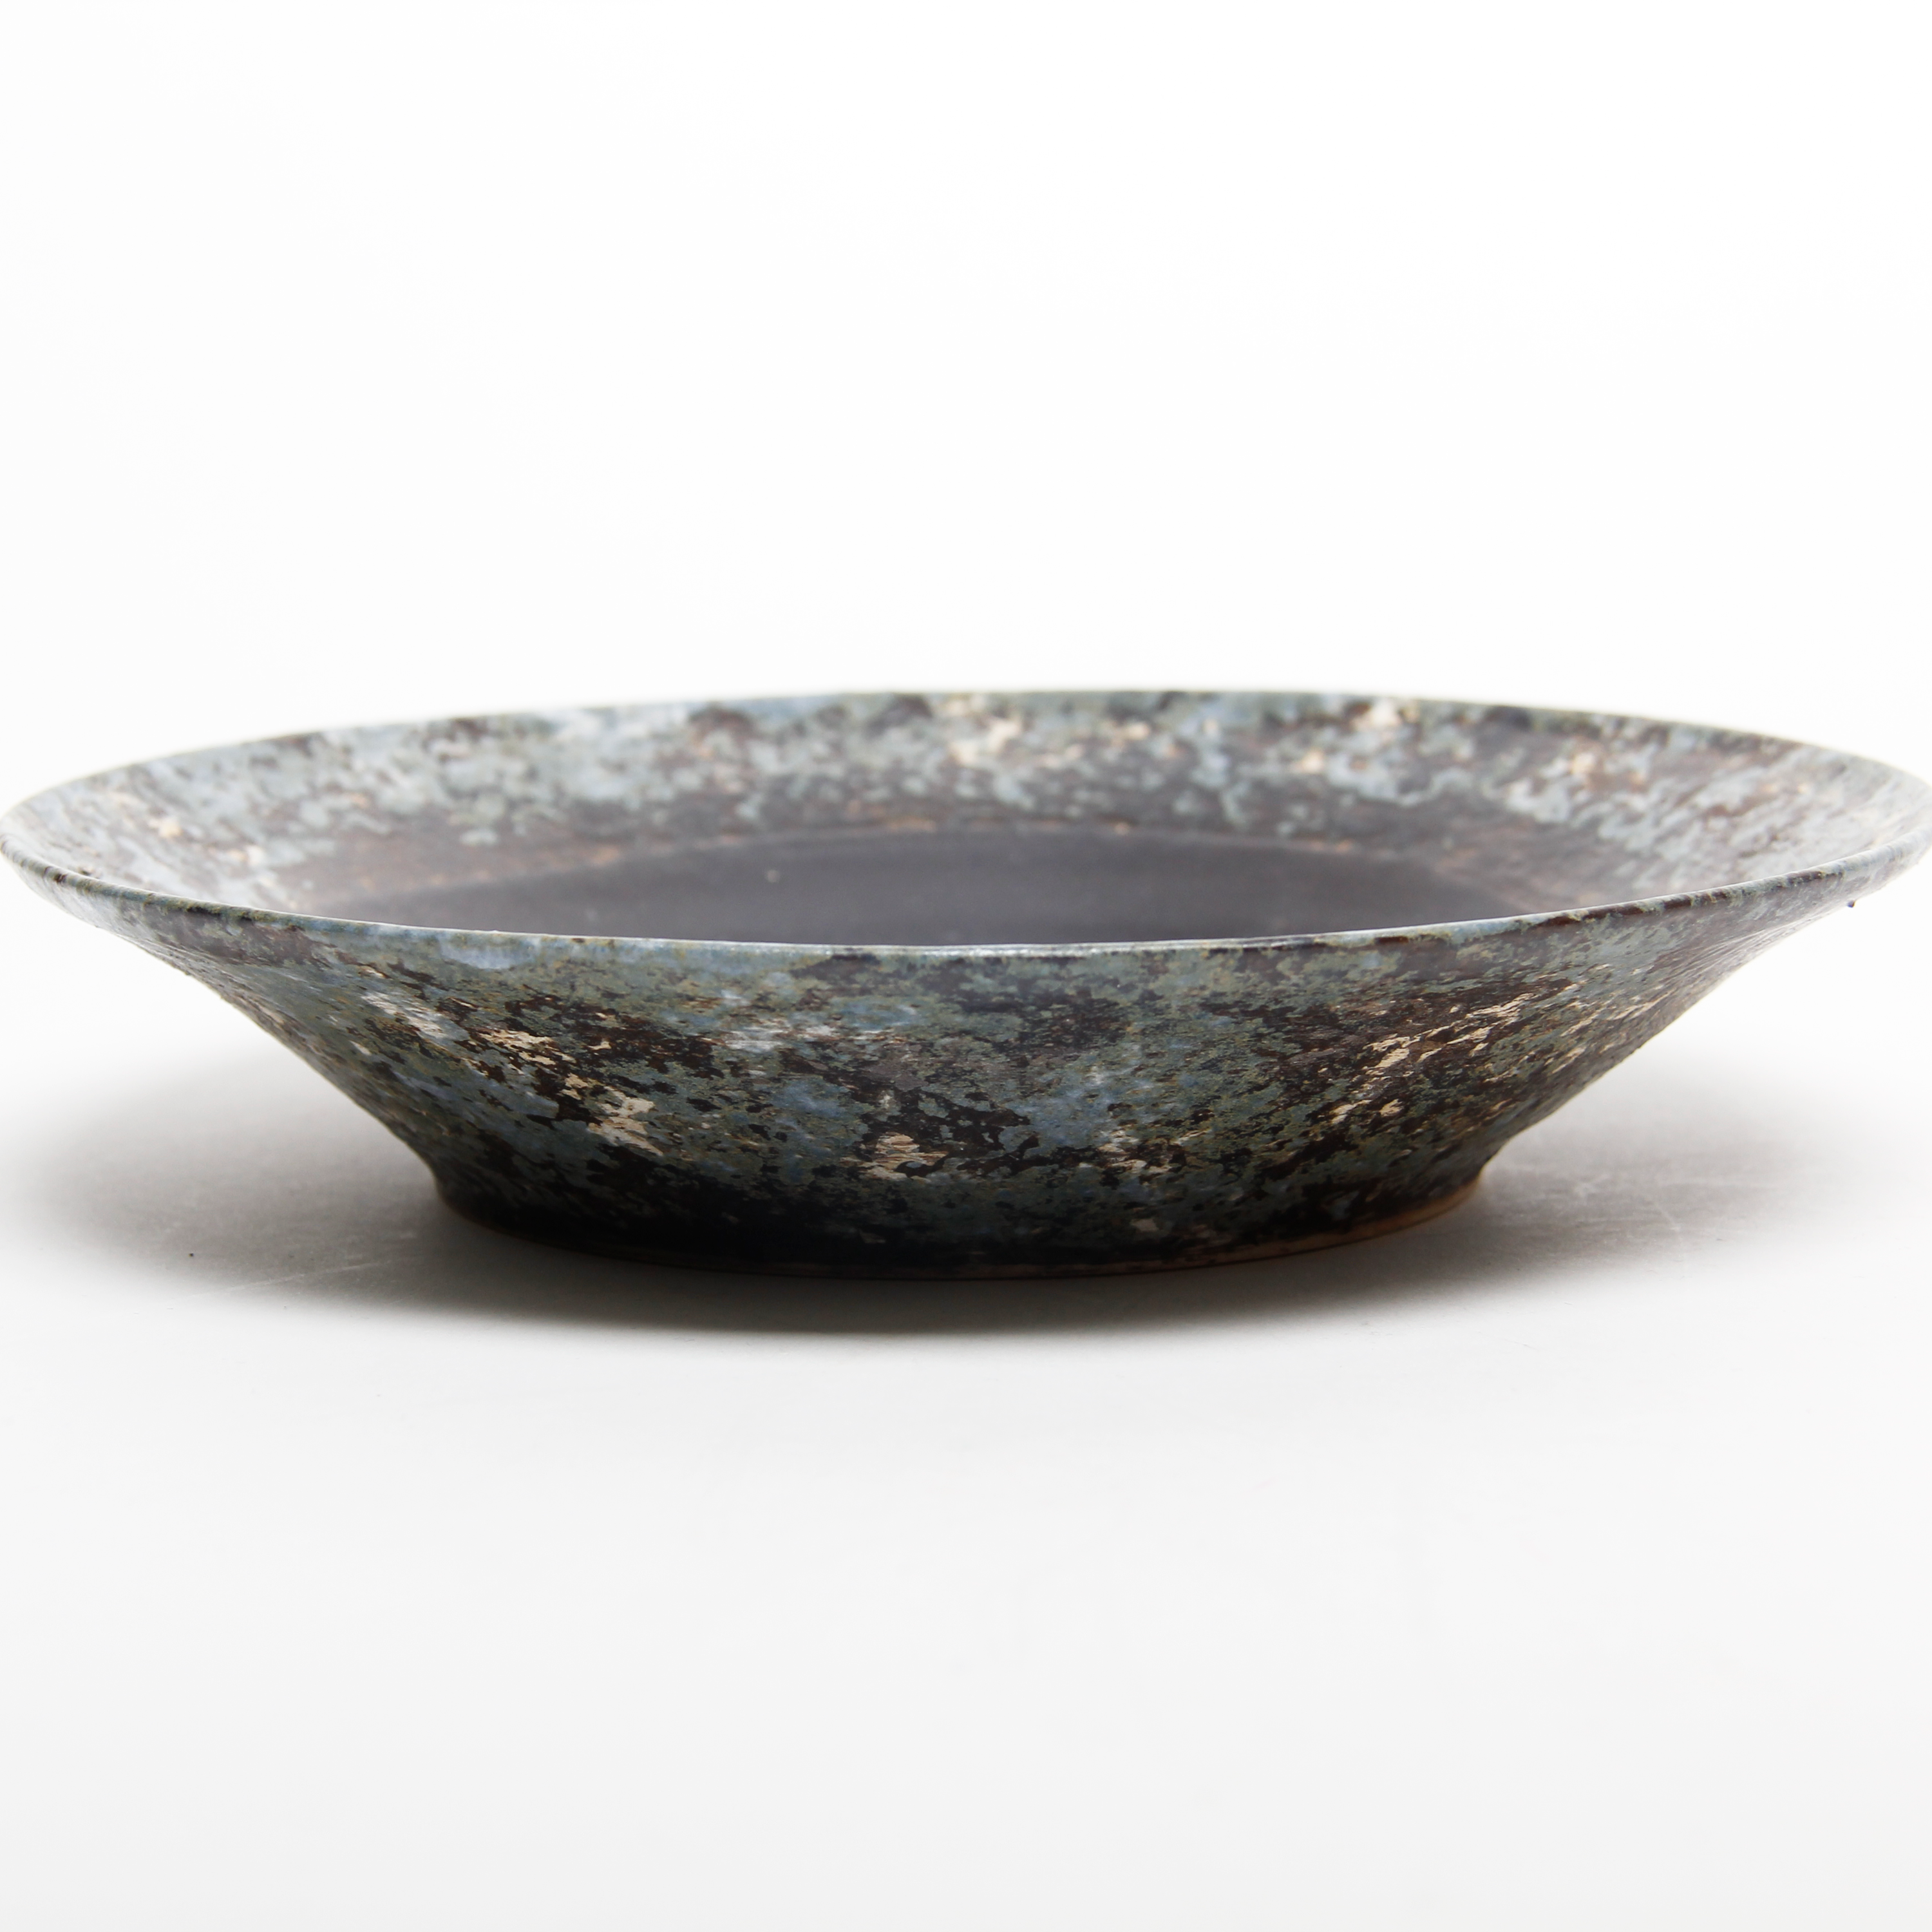 Makiko Hicher: Bowl Product Image 1 of 2